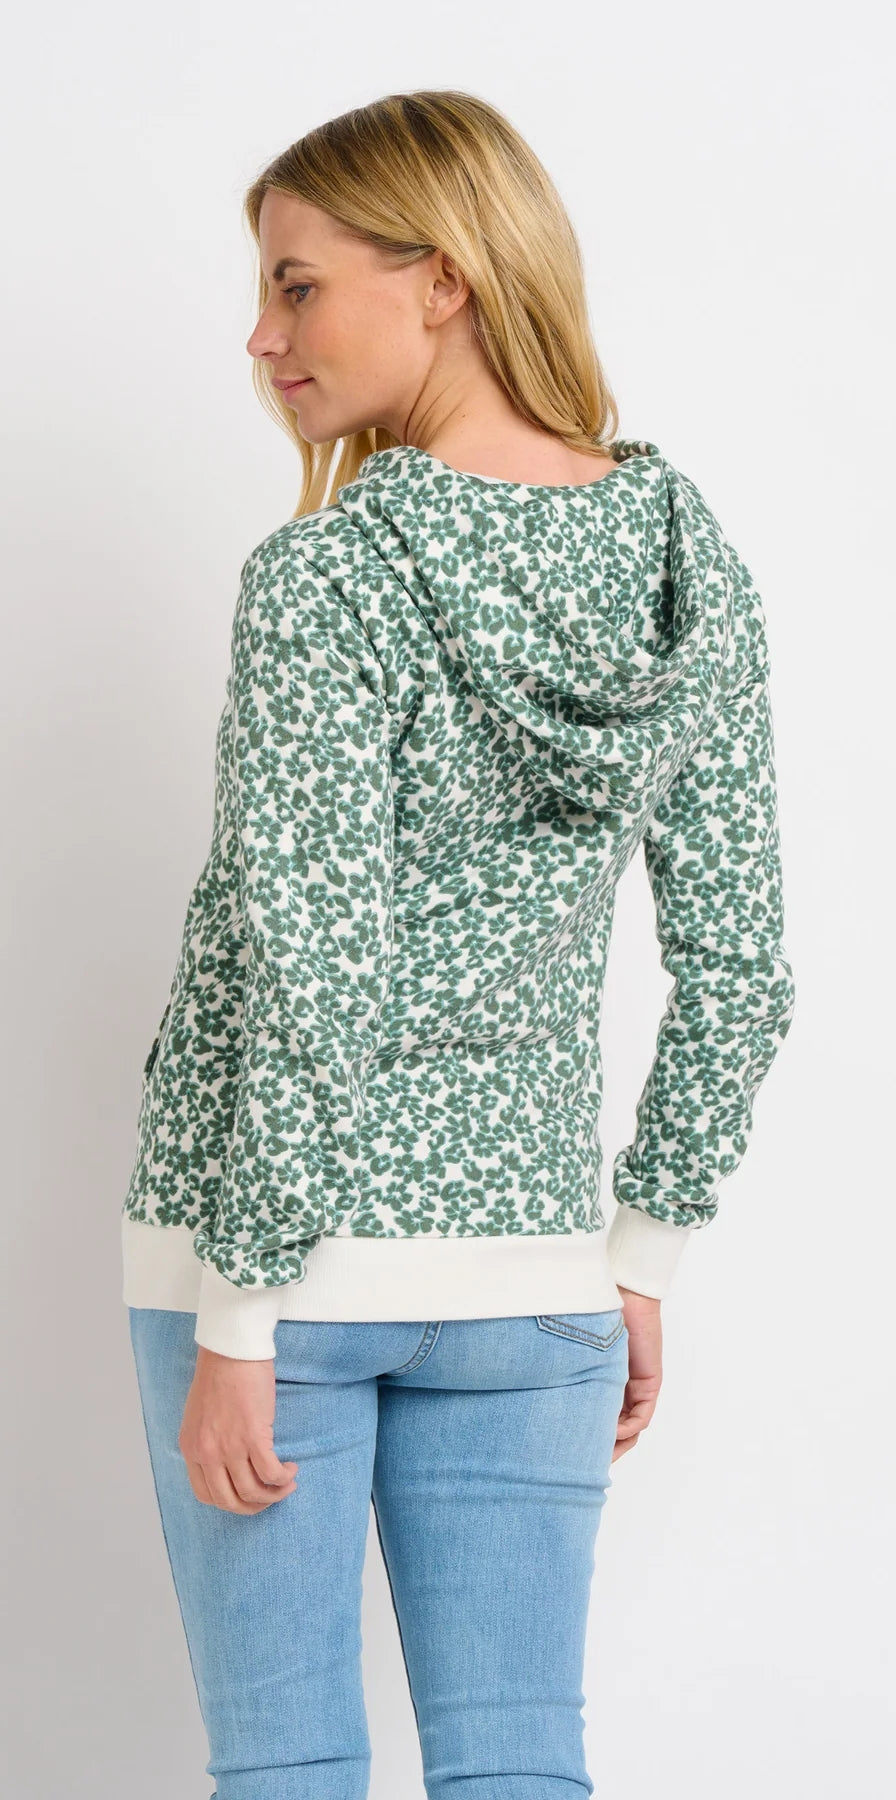 Women's leopard floral printed zip through hooded sweatshirt from Brakeburn in khaki green.